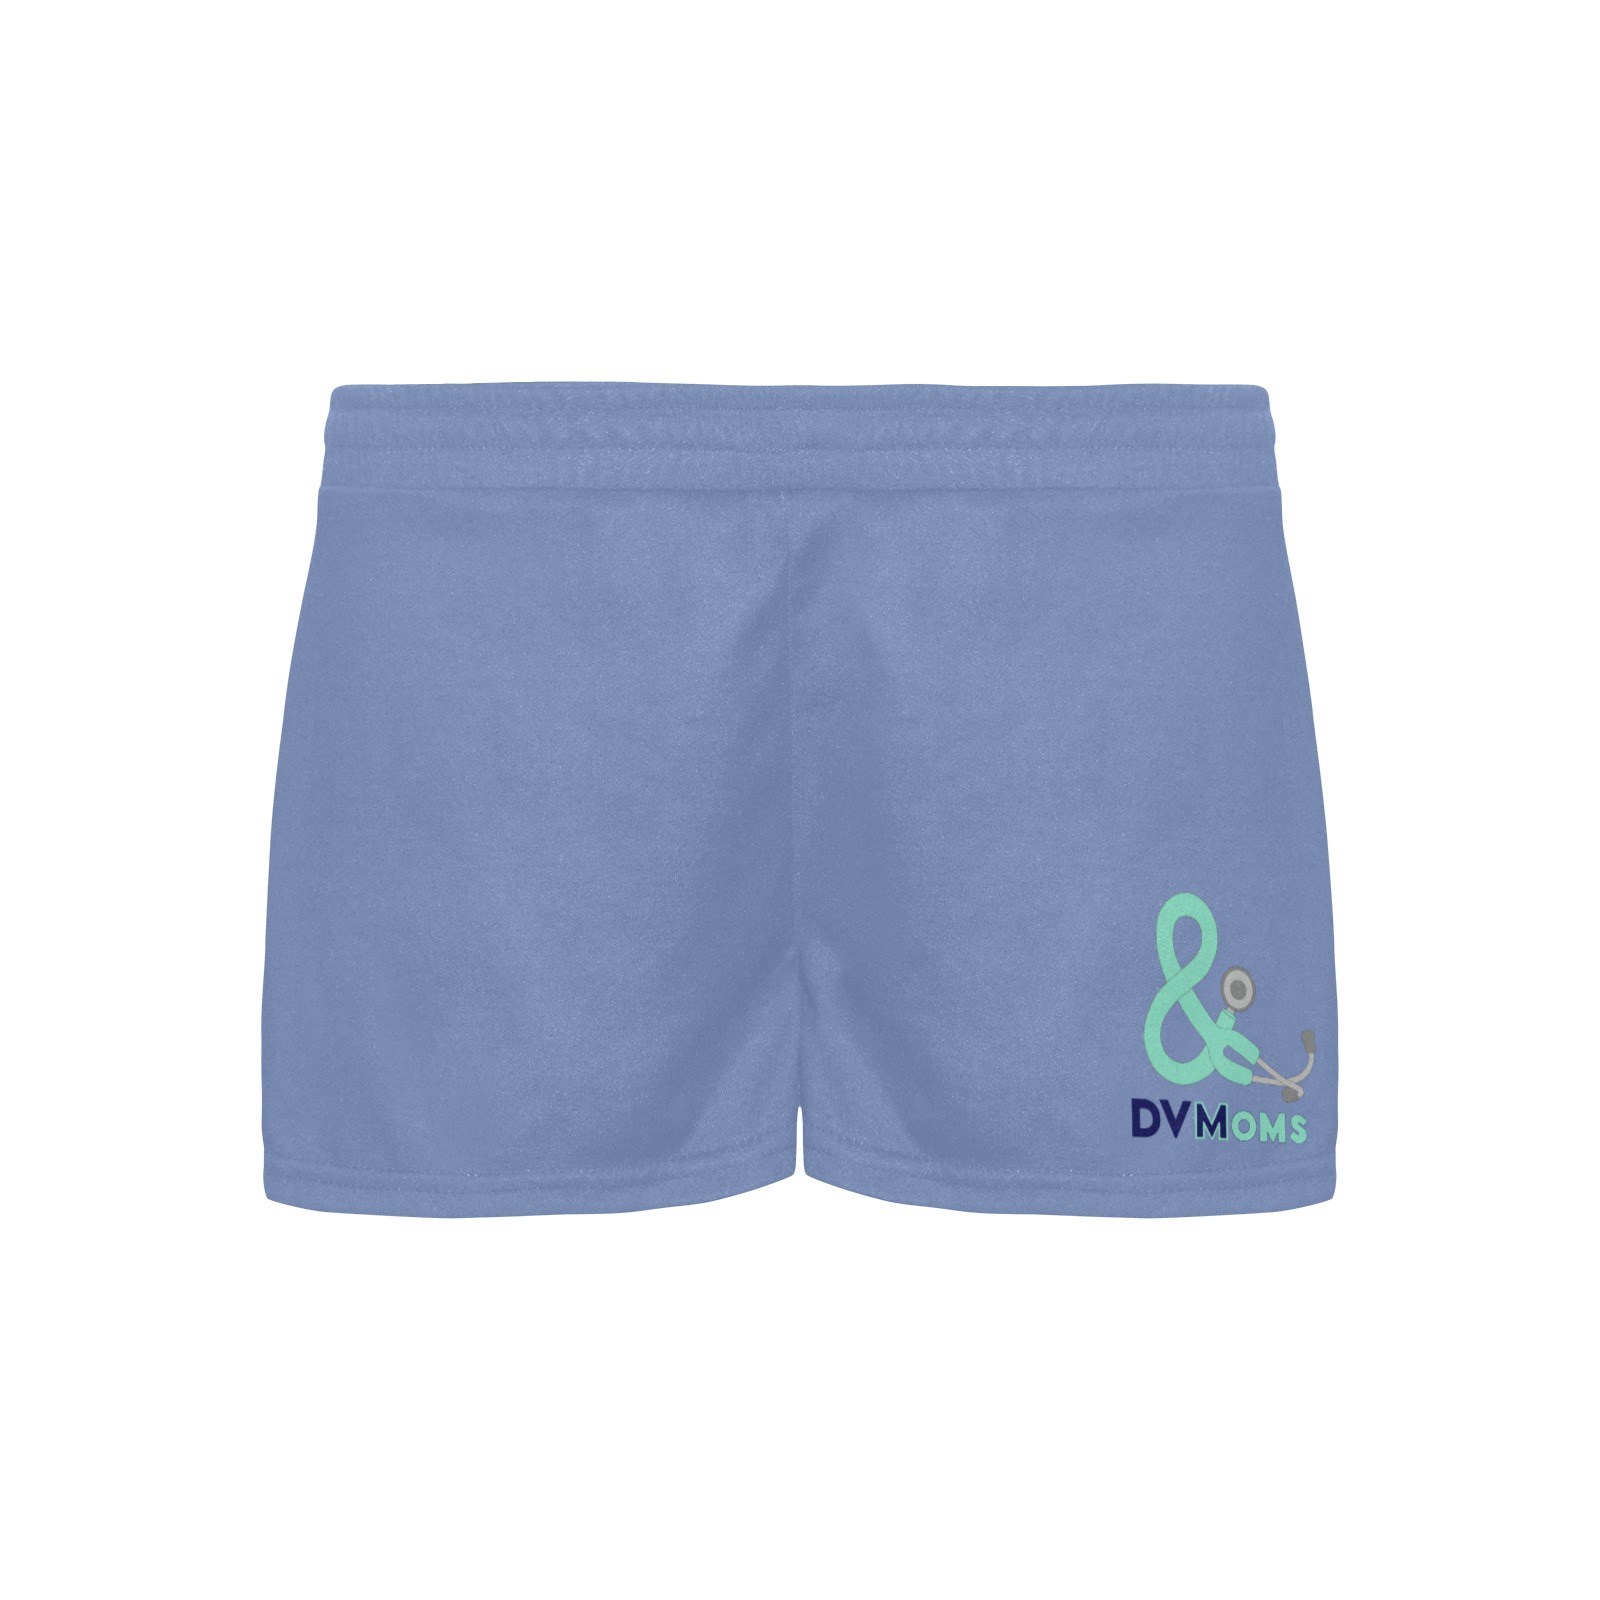 Shorts teal with single logo Women's Pajama Shorts